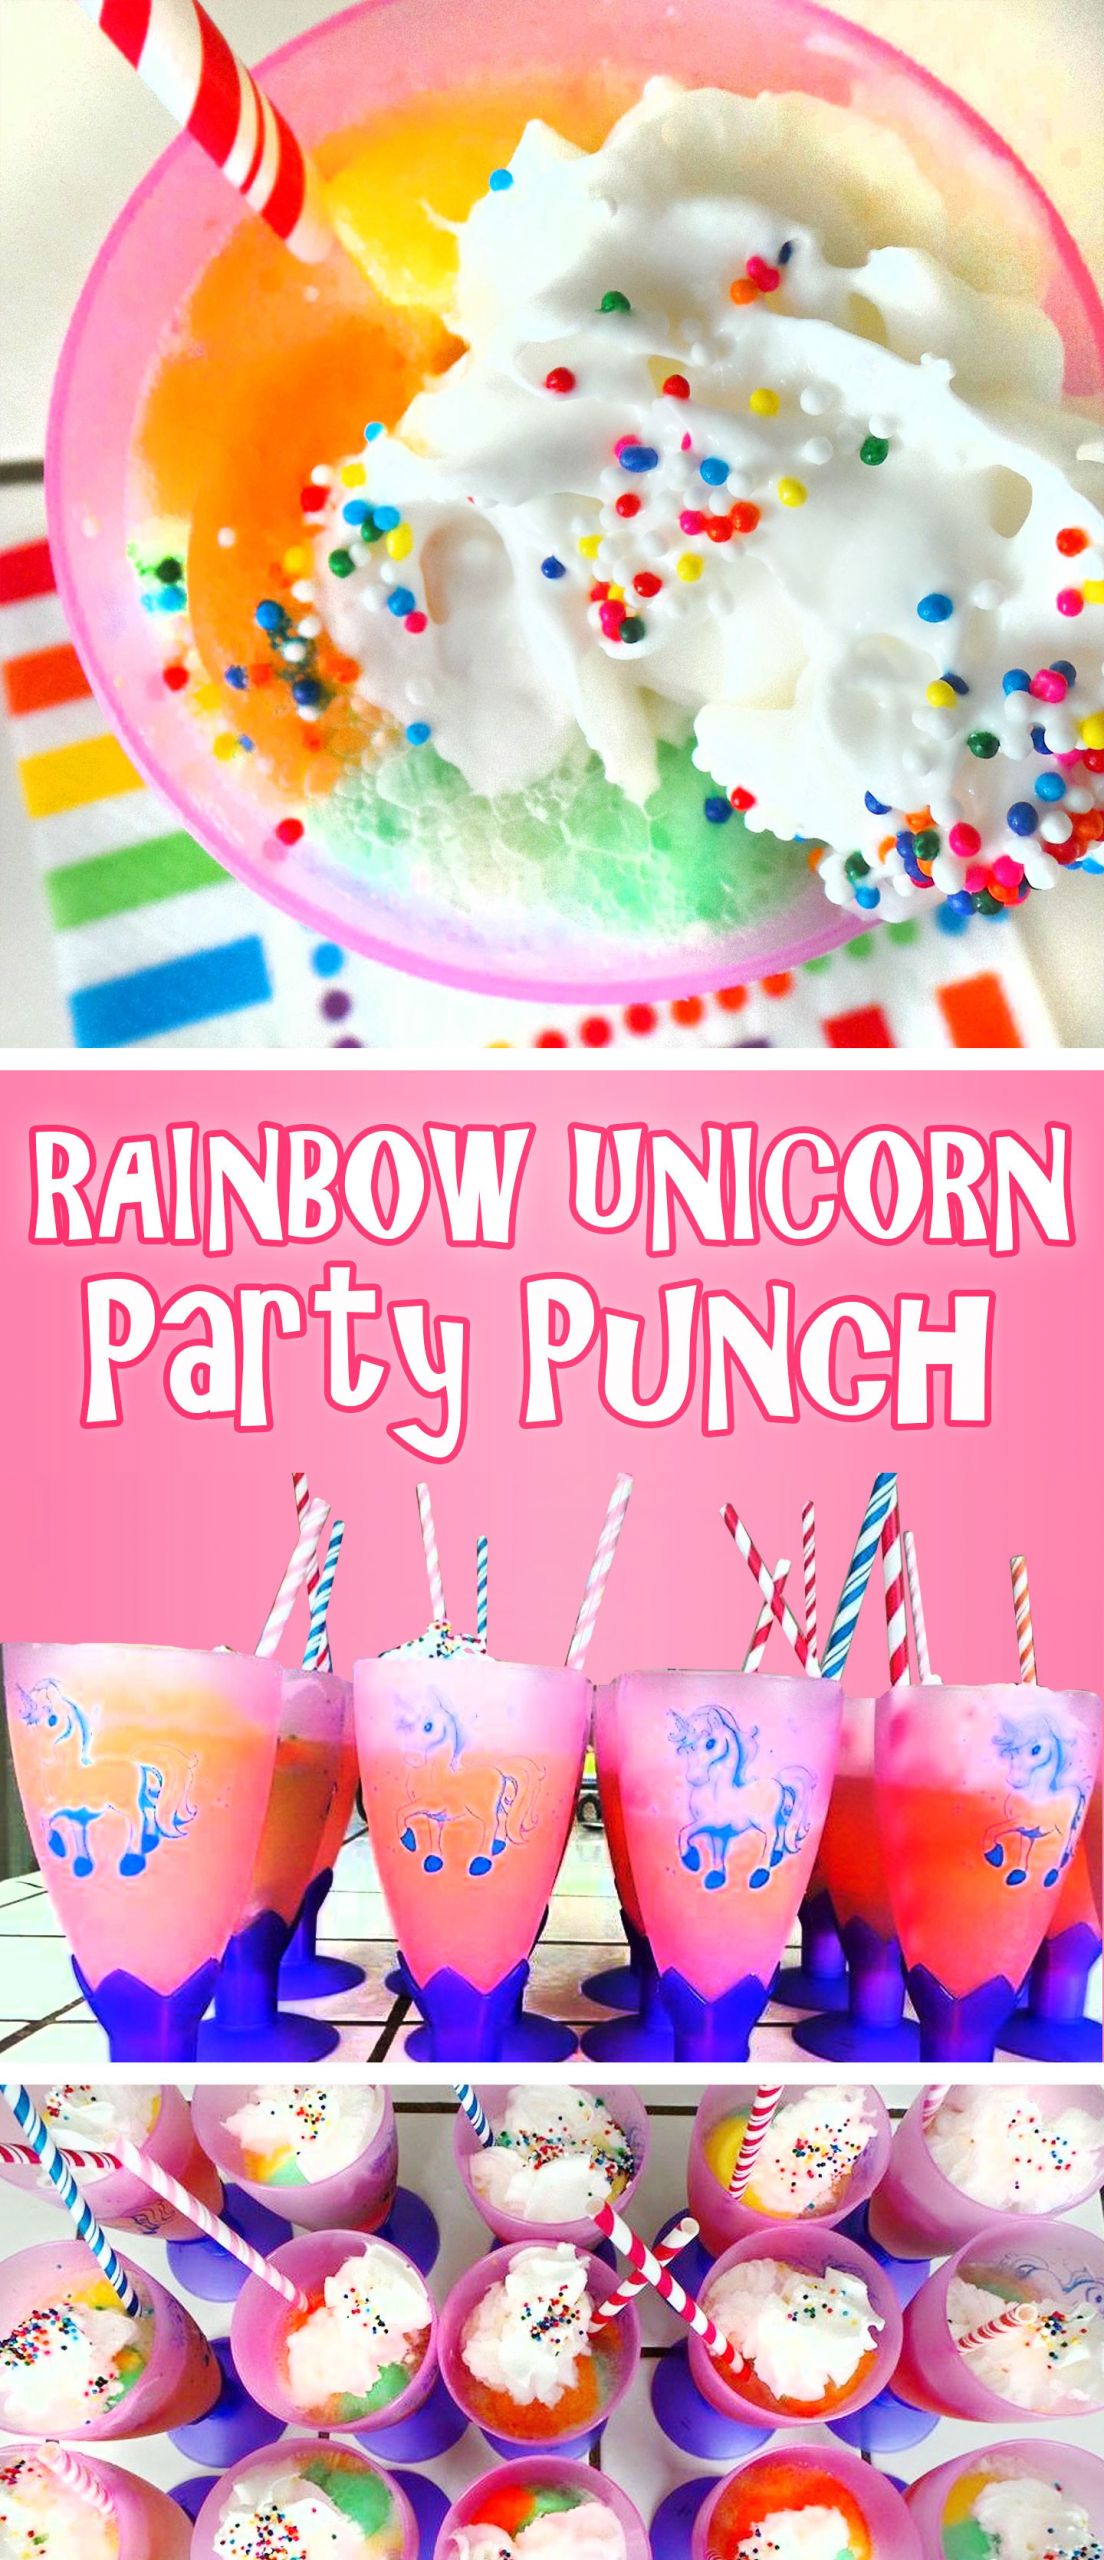 Rainbow And Unicorn Party Ideas
 Rainbow Unicorn Party Punch